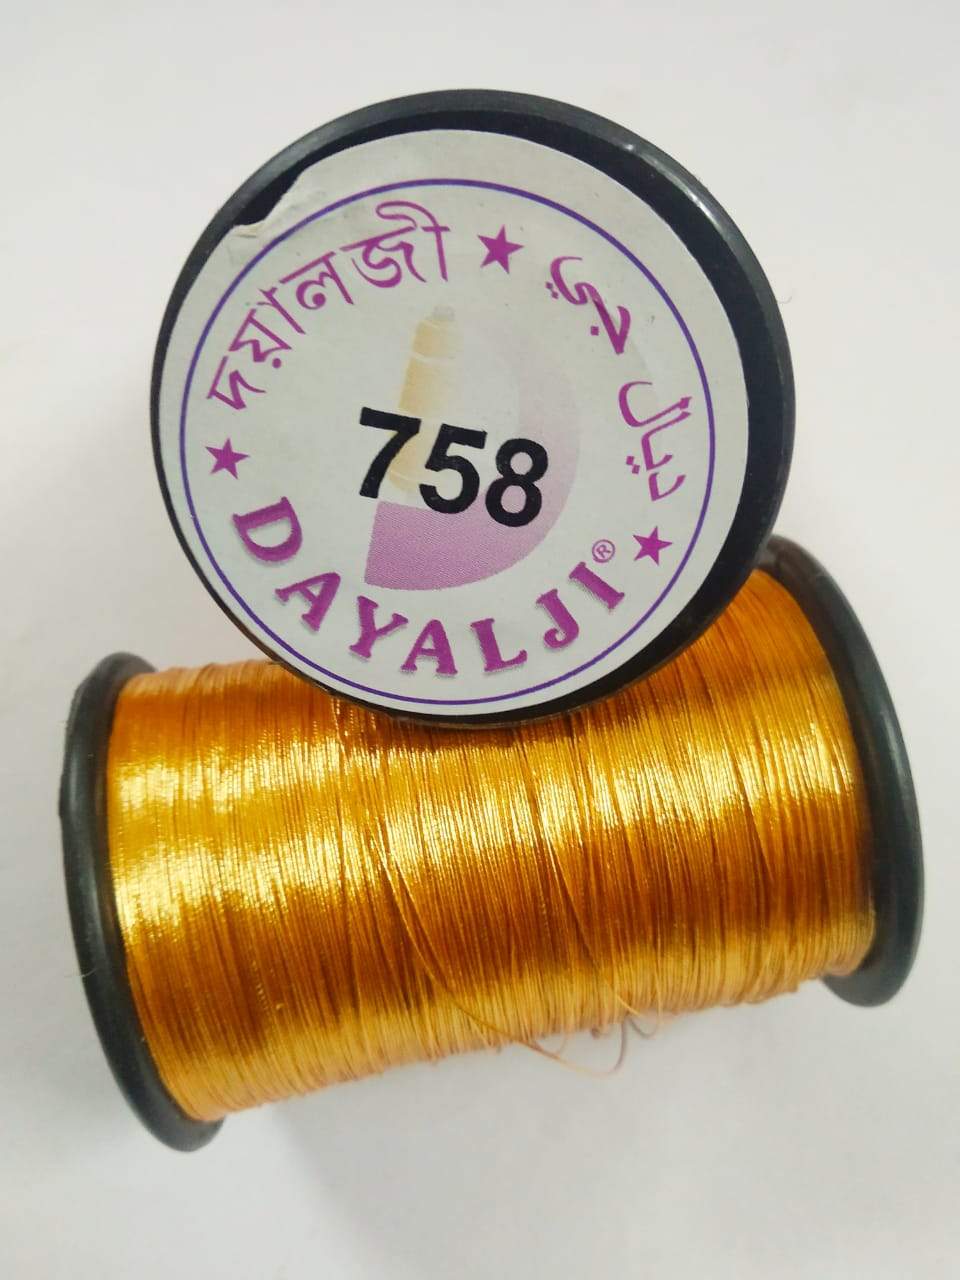 Zari Thread - 758 Zardhosi Threads & Rope